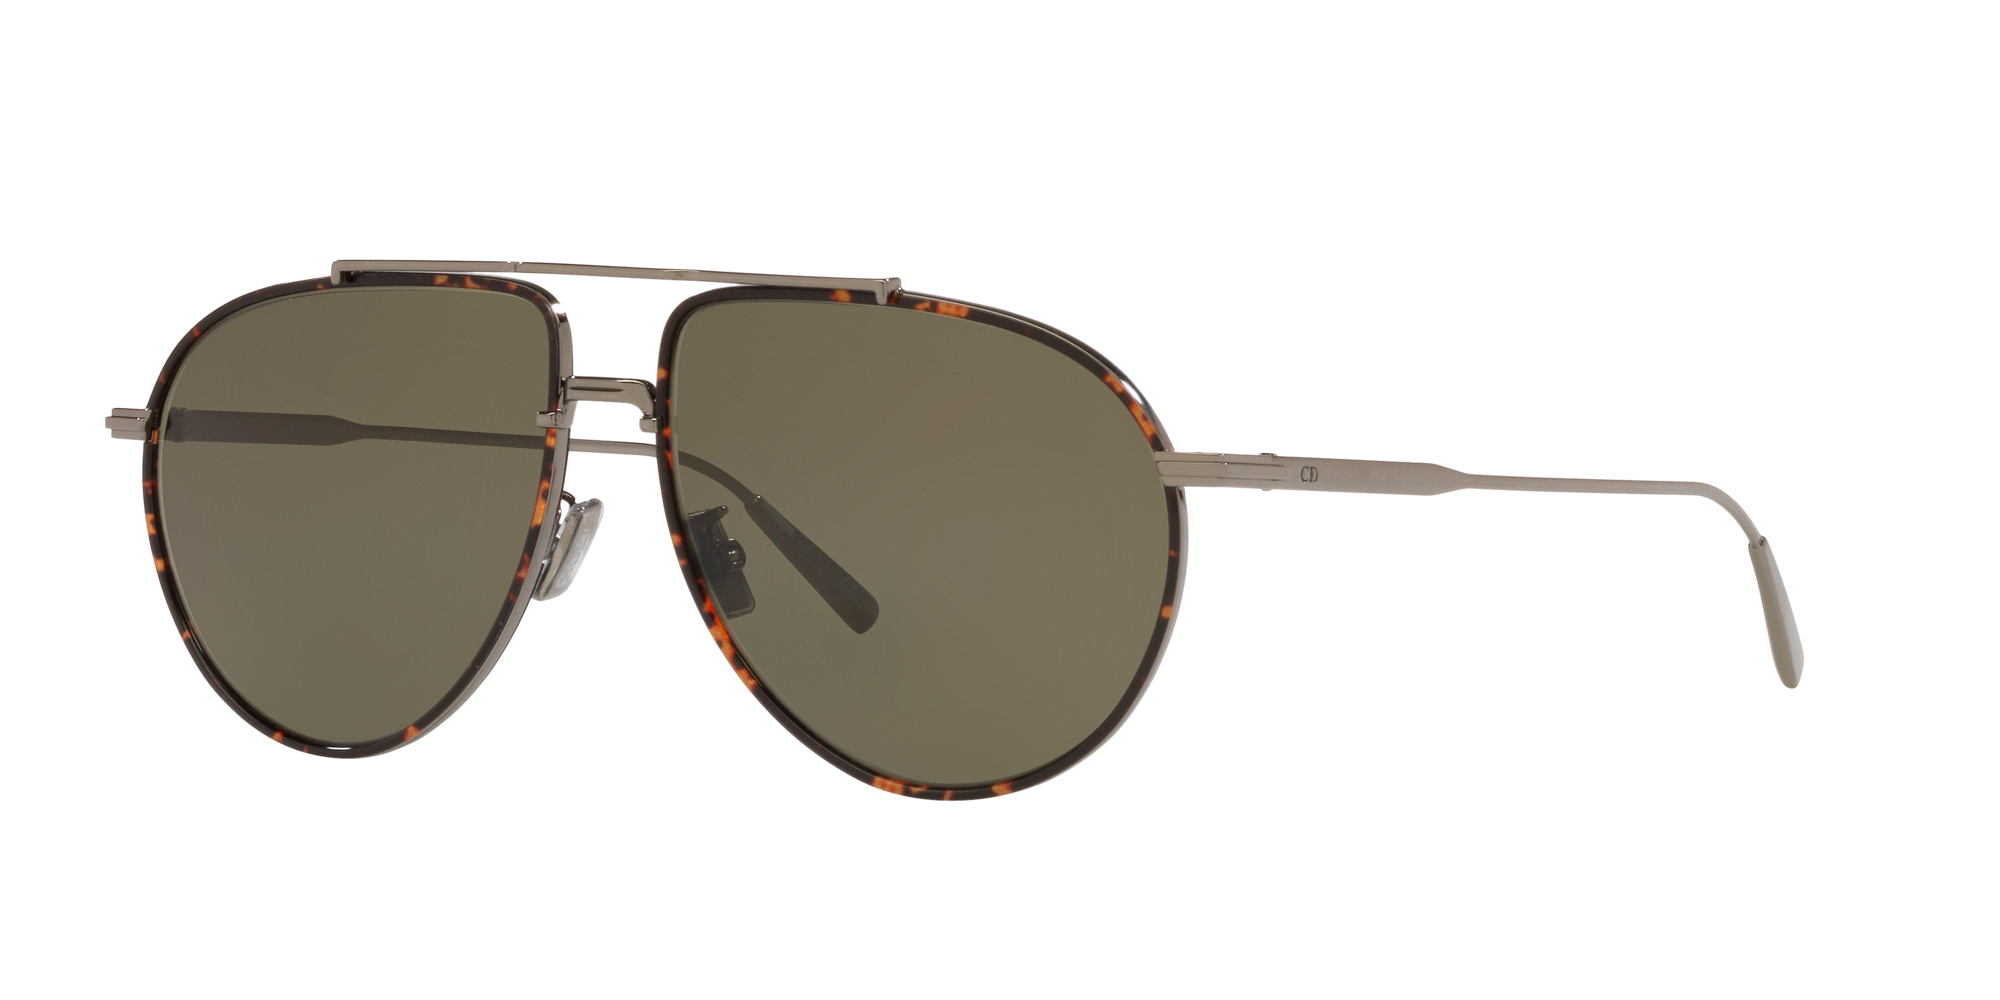 Mens new arrival sunglasses | Szade Sunglasses Australia